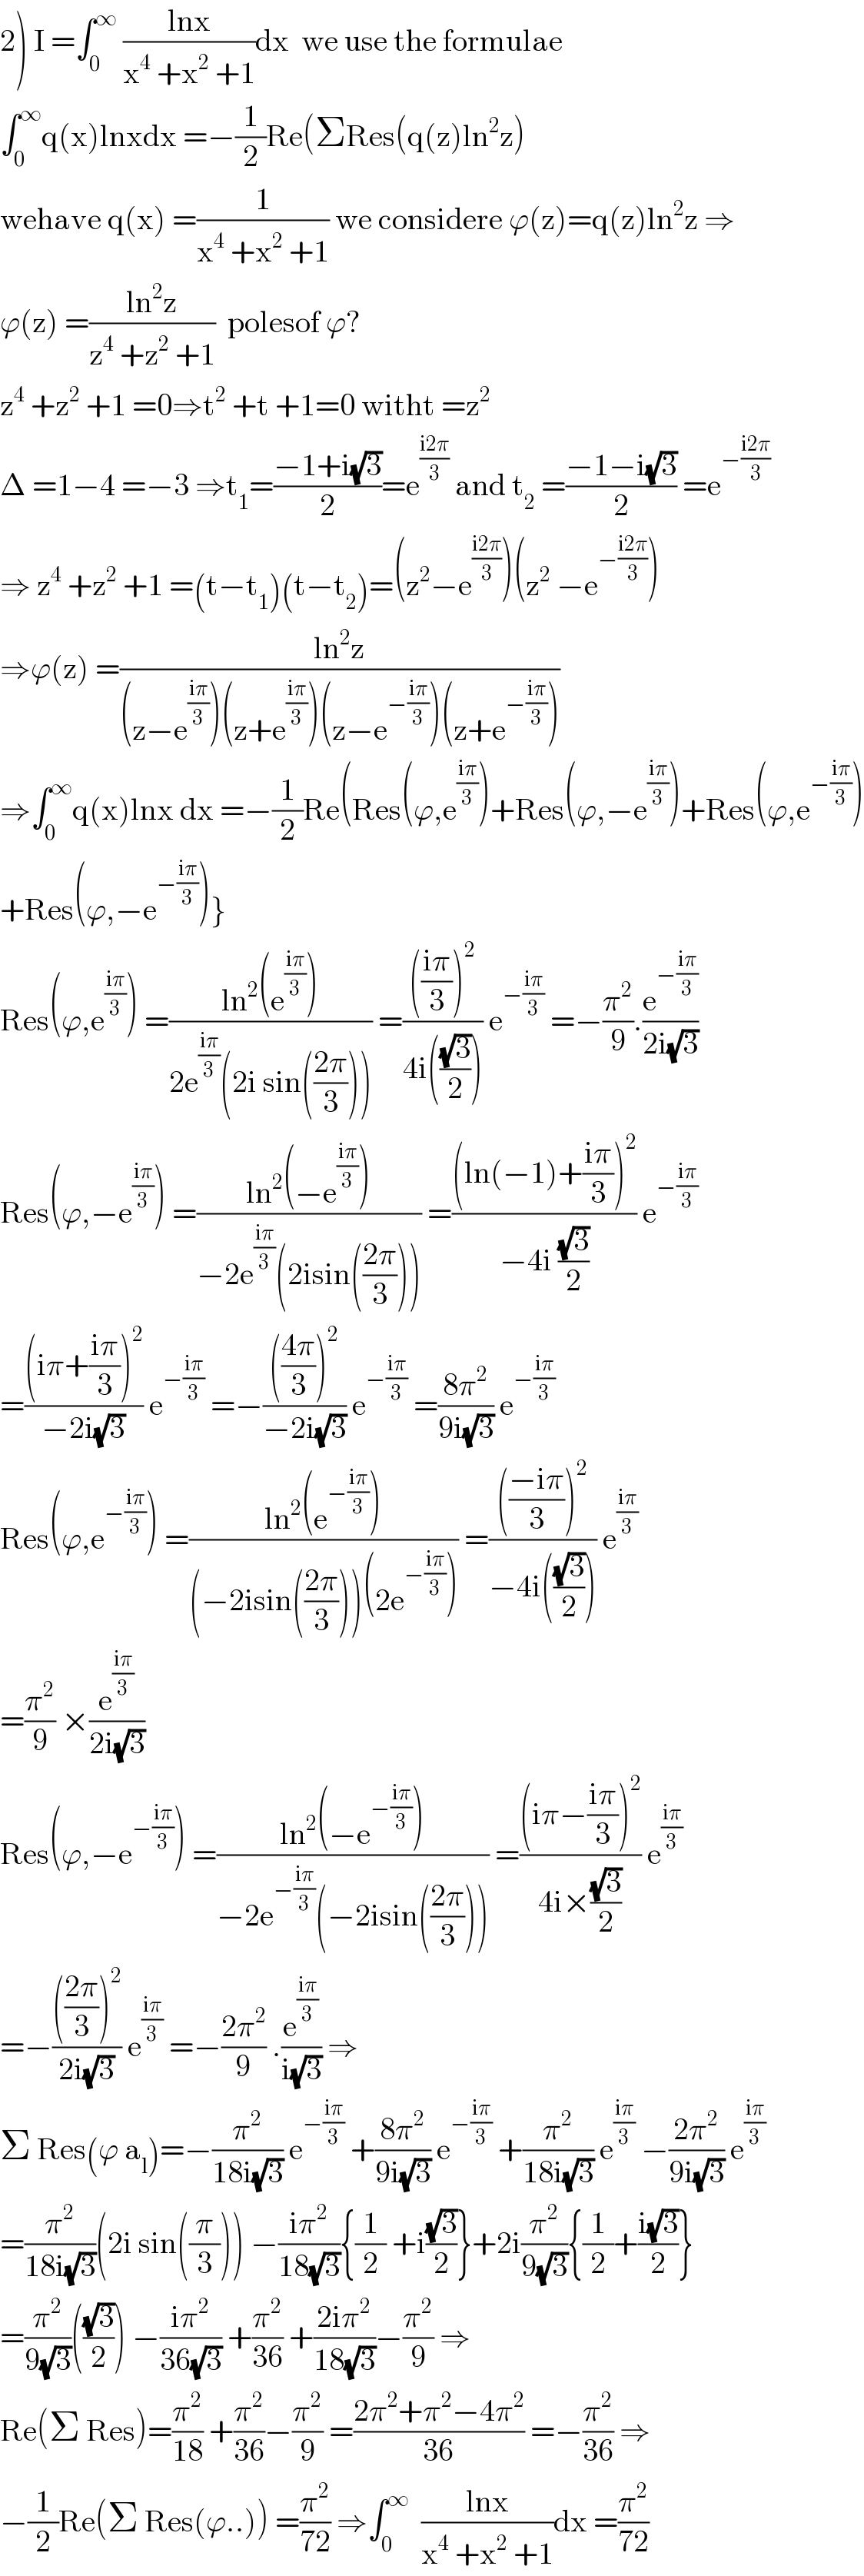 2) I =∫_0 ^∞  ((lnx)/(x^4  +x^2  +1))dx  we use the formulae  ∫_0 ^∞ q(x)lnxdx =−(1/2)Re(ΣRes(q(z)ln^2 z)  wehave q(x) =(1/(x^4  +x^2  +1)) we considere ϕ(z)=q(z)ln^2 z ⇒  ϕ(z) =((ln^2 z)/(z^4  +z^2  +1))  polesof ϕ?  z^4  +z^2  +1 =0⇒t^2  +t +1=0 witht =z^2   Δ =1−4 =−3 ⇒t_1 =((−1+i(√3))/2)=e^((i2π)/3)  and t_2  =((−1−i(√3))/2) =e^(−((i2π)/3))   ⇒ z^4  +z^2  +1 =(t−t_1 )(t−t_2 )=(z^2 −e^((i2π)/3) )(z^2  −e^(−((i2π)/3)) )  ⇒ϕ(z) =((ln^2 z)/((z−e^((iπ)/3) )(z+e^((iπ)/3) )(z−e^(−((iπ)/3)) )(z+e^(−((iπ)/3)) )))  ⇒∫_0 ^∞ q(x)lnx dx =−(1/2)Re(Res(ϕ,e^((iπ)/3) )+Res(ϕ,−e^((iπ)/3) )+Res(ϕ,e^(−((iπ)/3)) )  +Res(ϕ,−e^(−((iπ)/3)) )}  Res(ϕ,e^((iπ)/3) ) =((ln^2 (e^((iπ)/3) ))/(2e^((iπ)/3) (2i sin(((2π)/3))))) =(((((iπ)/3))^2 )/(4i(((√3)/2)))) e^(−((iπ)/3))  =−(π^2 /9).(e^(−((iπ)/3)) /(2i(√3)))  Res(ϕ,−e^((iπ)/3) ) =((ln^2 (−e^((iπ)/3) ))/(−2e^((iπ)/3) (2isin(((2π)/3))))) =(((ln(−1)+((iπ)/3))^2 )/(−4i ((√3)/2))) e^(−((iπ)/3))   =(((iπ+((iπ)/3))^2 )/(−2i(√3))) e^(−((iπ)/3))  =−(((((4π)/3))^2 )/(−2i(√3))) e^(−((iπ)/3))  =((8π^2 )/(9i(√3))) e^(−((iπ)/3))   Res(ϕ,e^(−((iπ)/3)) ) =((ln^2 (e^(−((iπ)/3)) ))/((−2isin(((2π)/3)))(2e^(−((iπ)/3)) ))) =(((((−iπ)/3))^2 )/(−4i(((√3)/2)))) e^((iπ)/3)   =(π^2 /9) ×(e^((iπ)/3) /(2i(√3)))  Res(ϕ,−e^(−((iπ)/3)) ) =((ln^2 (−e^(−((iπ)/3)) ))/(−2e^(−((iπ)/3)) (−2isin(((2π)/3))))) =(((iπ−((iπ)/3))^2 )/(4i×((√3)/2))) e^((iπ)/3)   =−(((((2π)/3))^2 )/(2i(√3))) e^((iπ)/3)  =−((2π^2 )/9) .(e^((iπ)/3) /(i(√3))) ⇒  Σ Res(ϕ a_l )=−(π^2 /(18i(√3))) e^(−((iπ)/3))  +((8π^2 )/(9i(√3))) e^(−((iπ)/3))  +(π^2 /(18i(√3))) e^((iπ)/3)  −((2π^2 )/(9i(√3))) e^((iπ)/3)   =(π^2 /(18i(√3)))(2i sin((π/3))) −((iπ^2 )/(18(√3))){(1/2) +i((√3)/2)}+2i(π^2 /(9(√3))){(1/2)+((i(√3))/2)}  =(π^2 /(9(√3)))(((√3)/2)) −((iπ^2 )/(36(√3))) +(π^2 /(36)) +((2iπ^2 )/(18(√3)))−(π^2 /9) ⇒  Re(Σ Res)=(π^2 /(18)) +(π^2 /(36))−(π^2 /9) =((2π^2 +π^2 −4π^2 )/(36)) =−(π^2 /(36)) ⇒  −(1/2)Re(Σ Res(ϕ..)) =(π^2 /(72)) ⇒∫_0 ^∞   ((lnx)/(x^4  +x^2  +1))dx =(π^2 /(72))  